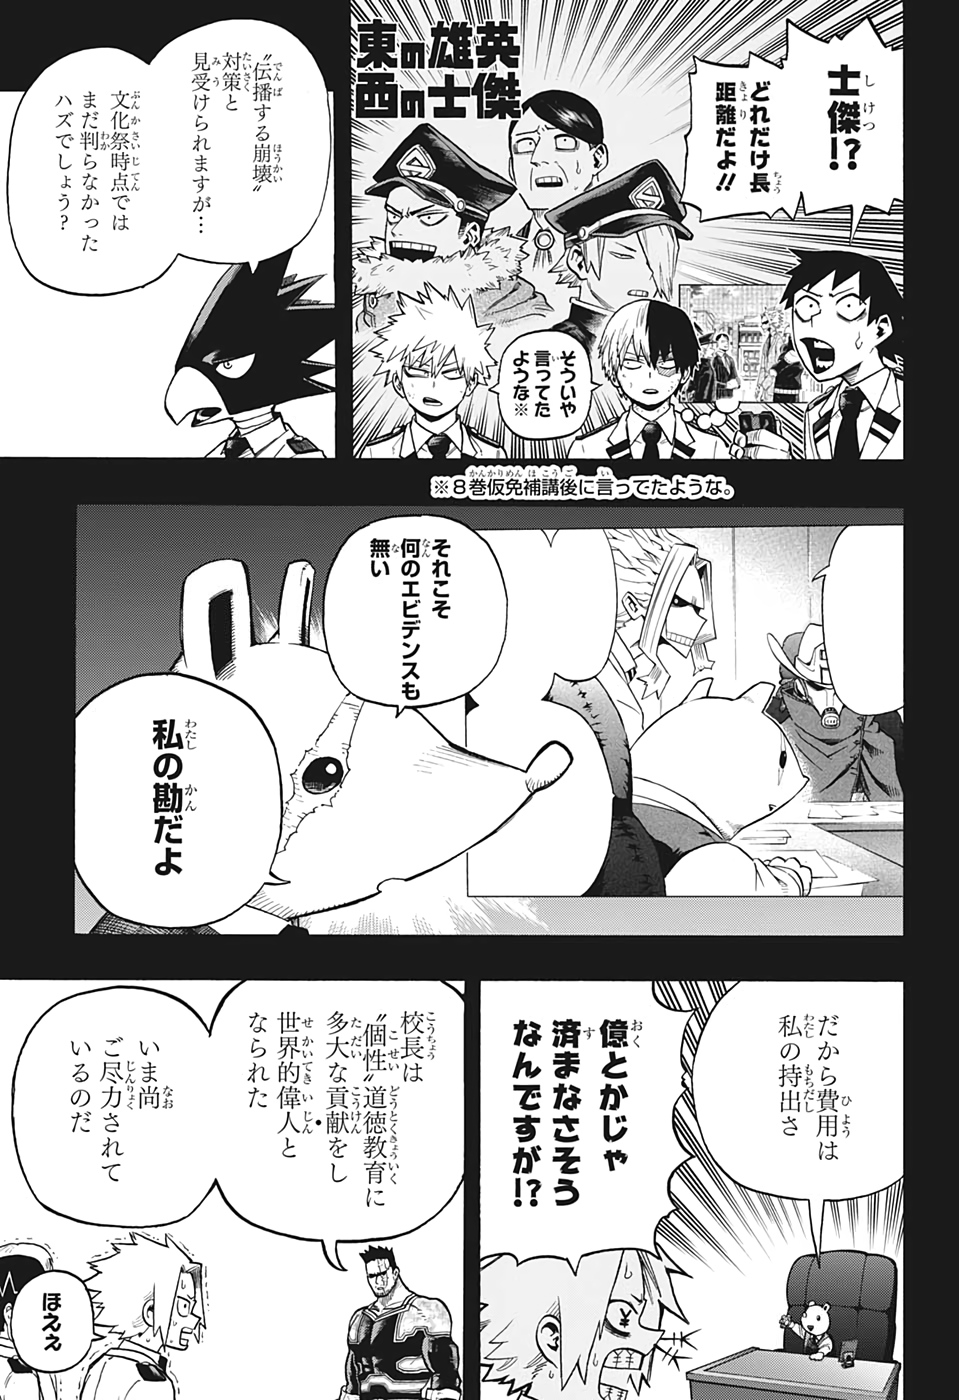 Boku no Hero Academia - Chapter 323 - Page 5